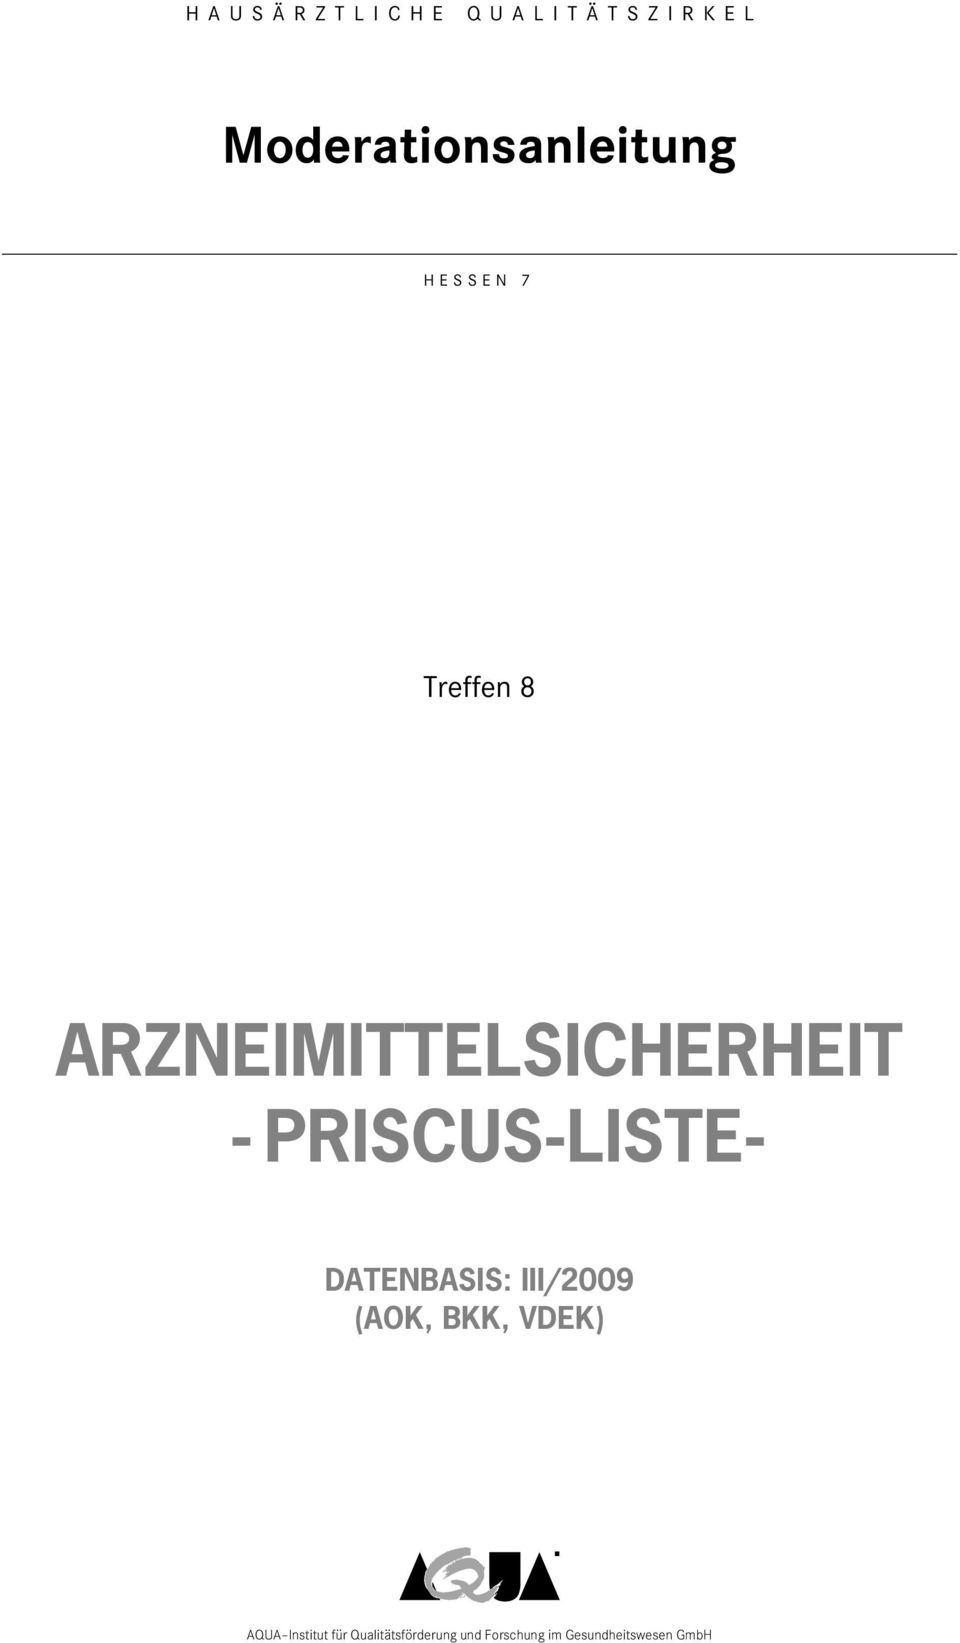 PRISCUS-LISTE- DATENBASIS: III/2009 (AOK, BKK, VDEK)